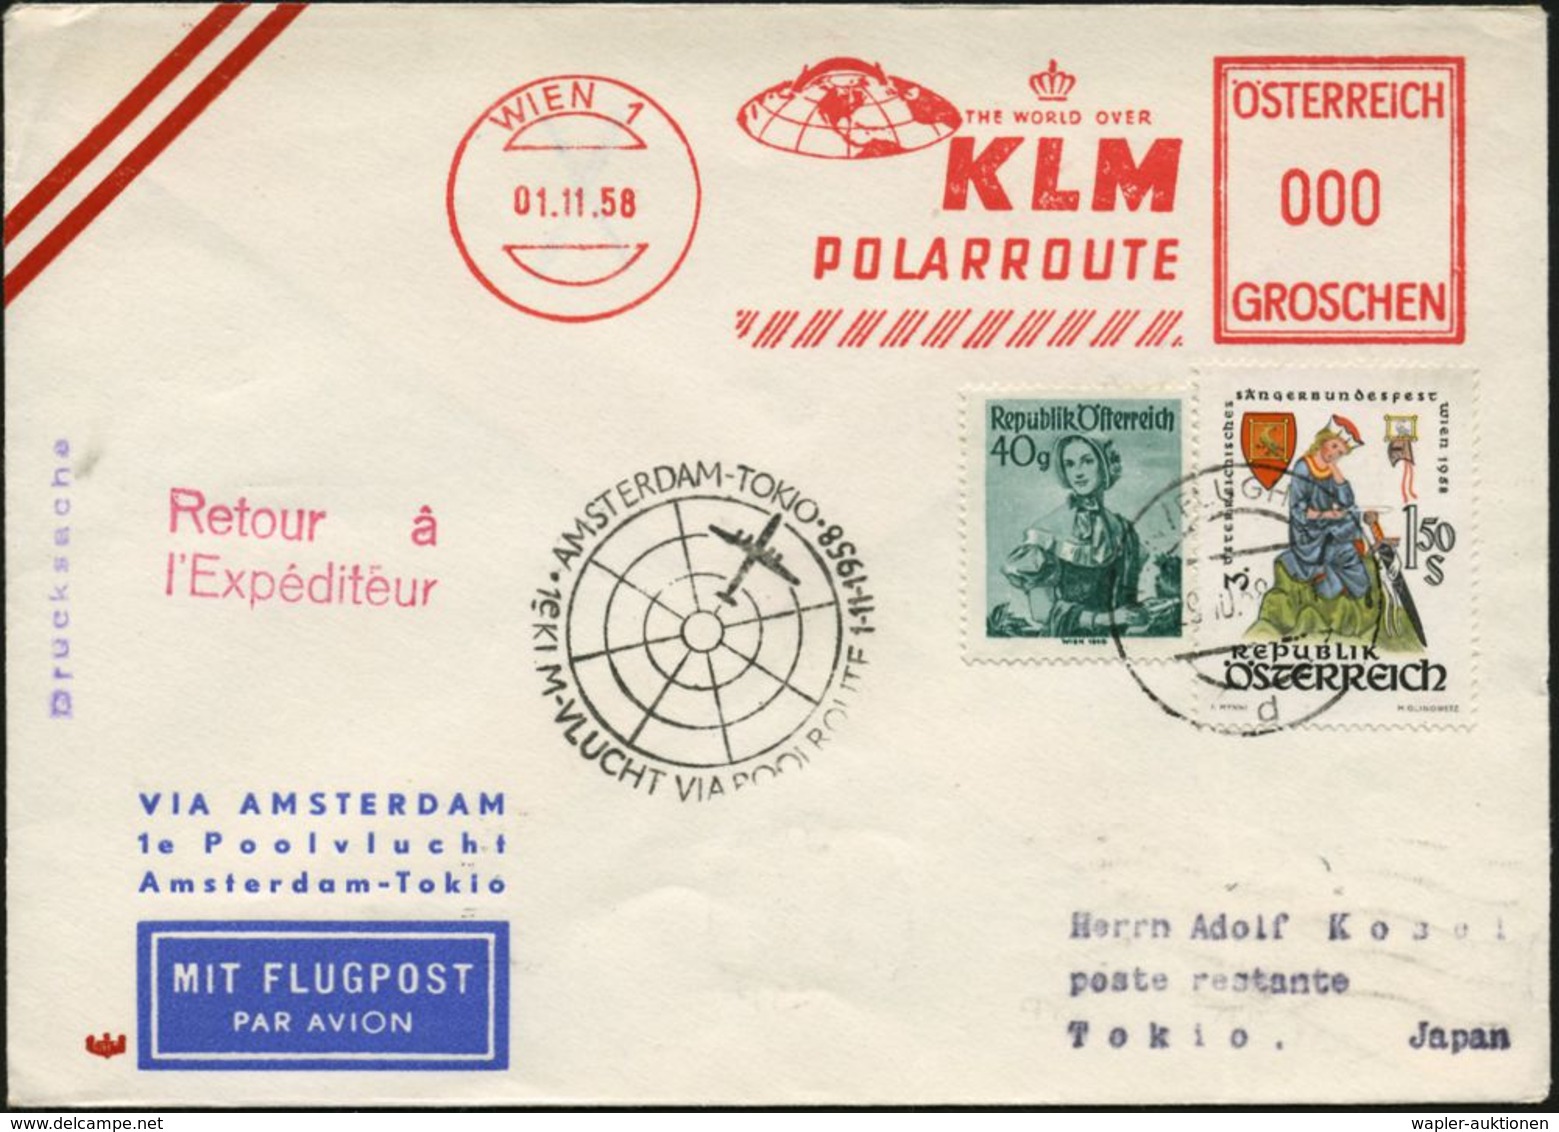 ÖSTERREICH 1958 (1.11.) Erstflug-Bf. (KLM): Amsterdam - Tokyo Via Nordpol (AS) AFS 000: WIEN 1/KLM/POLARROUTE (nördl. Gl - Arctic Expeditions